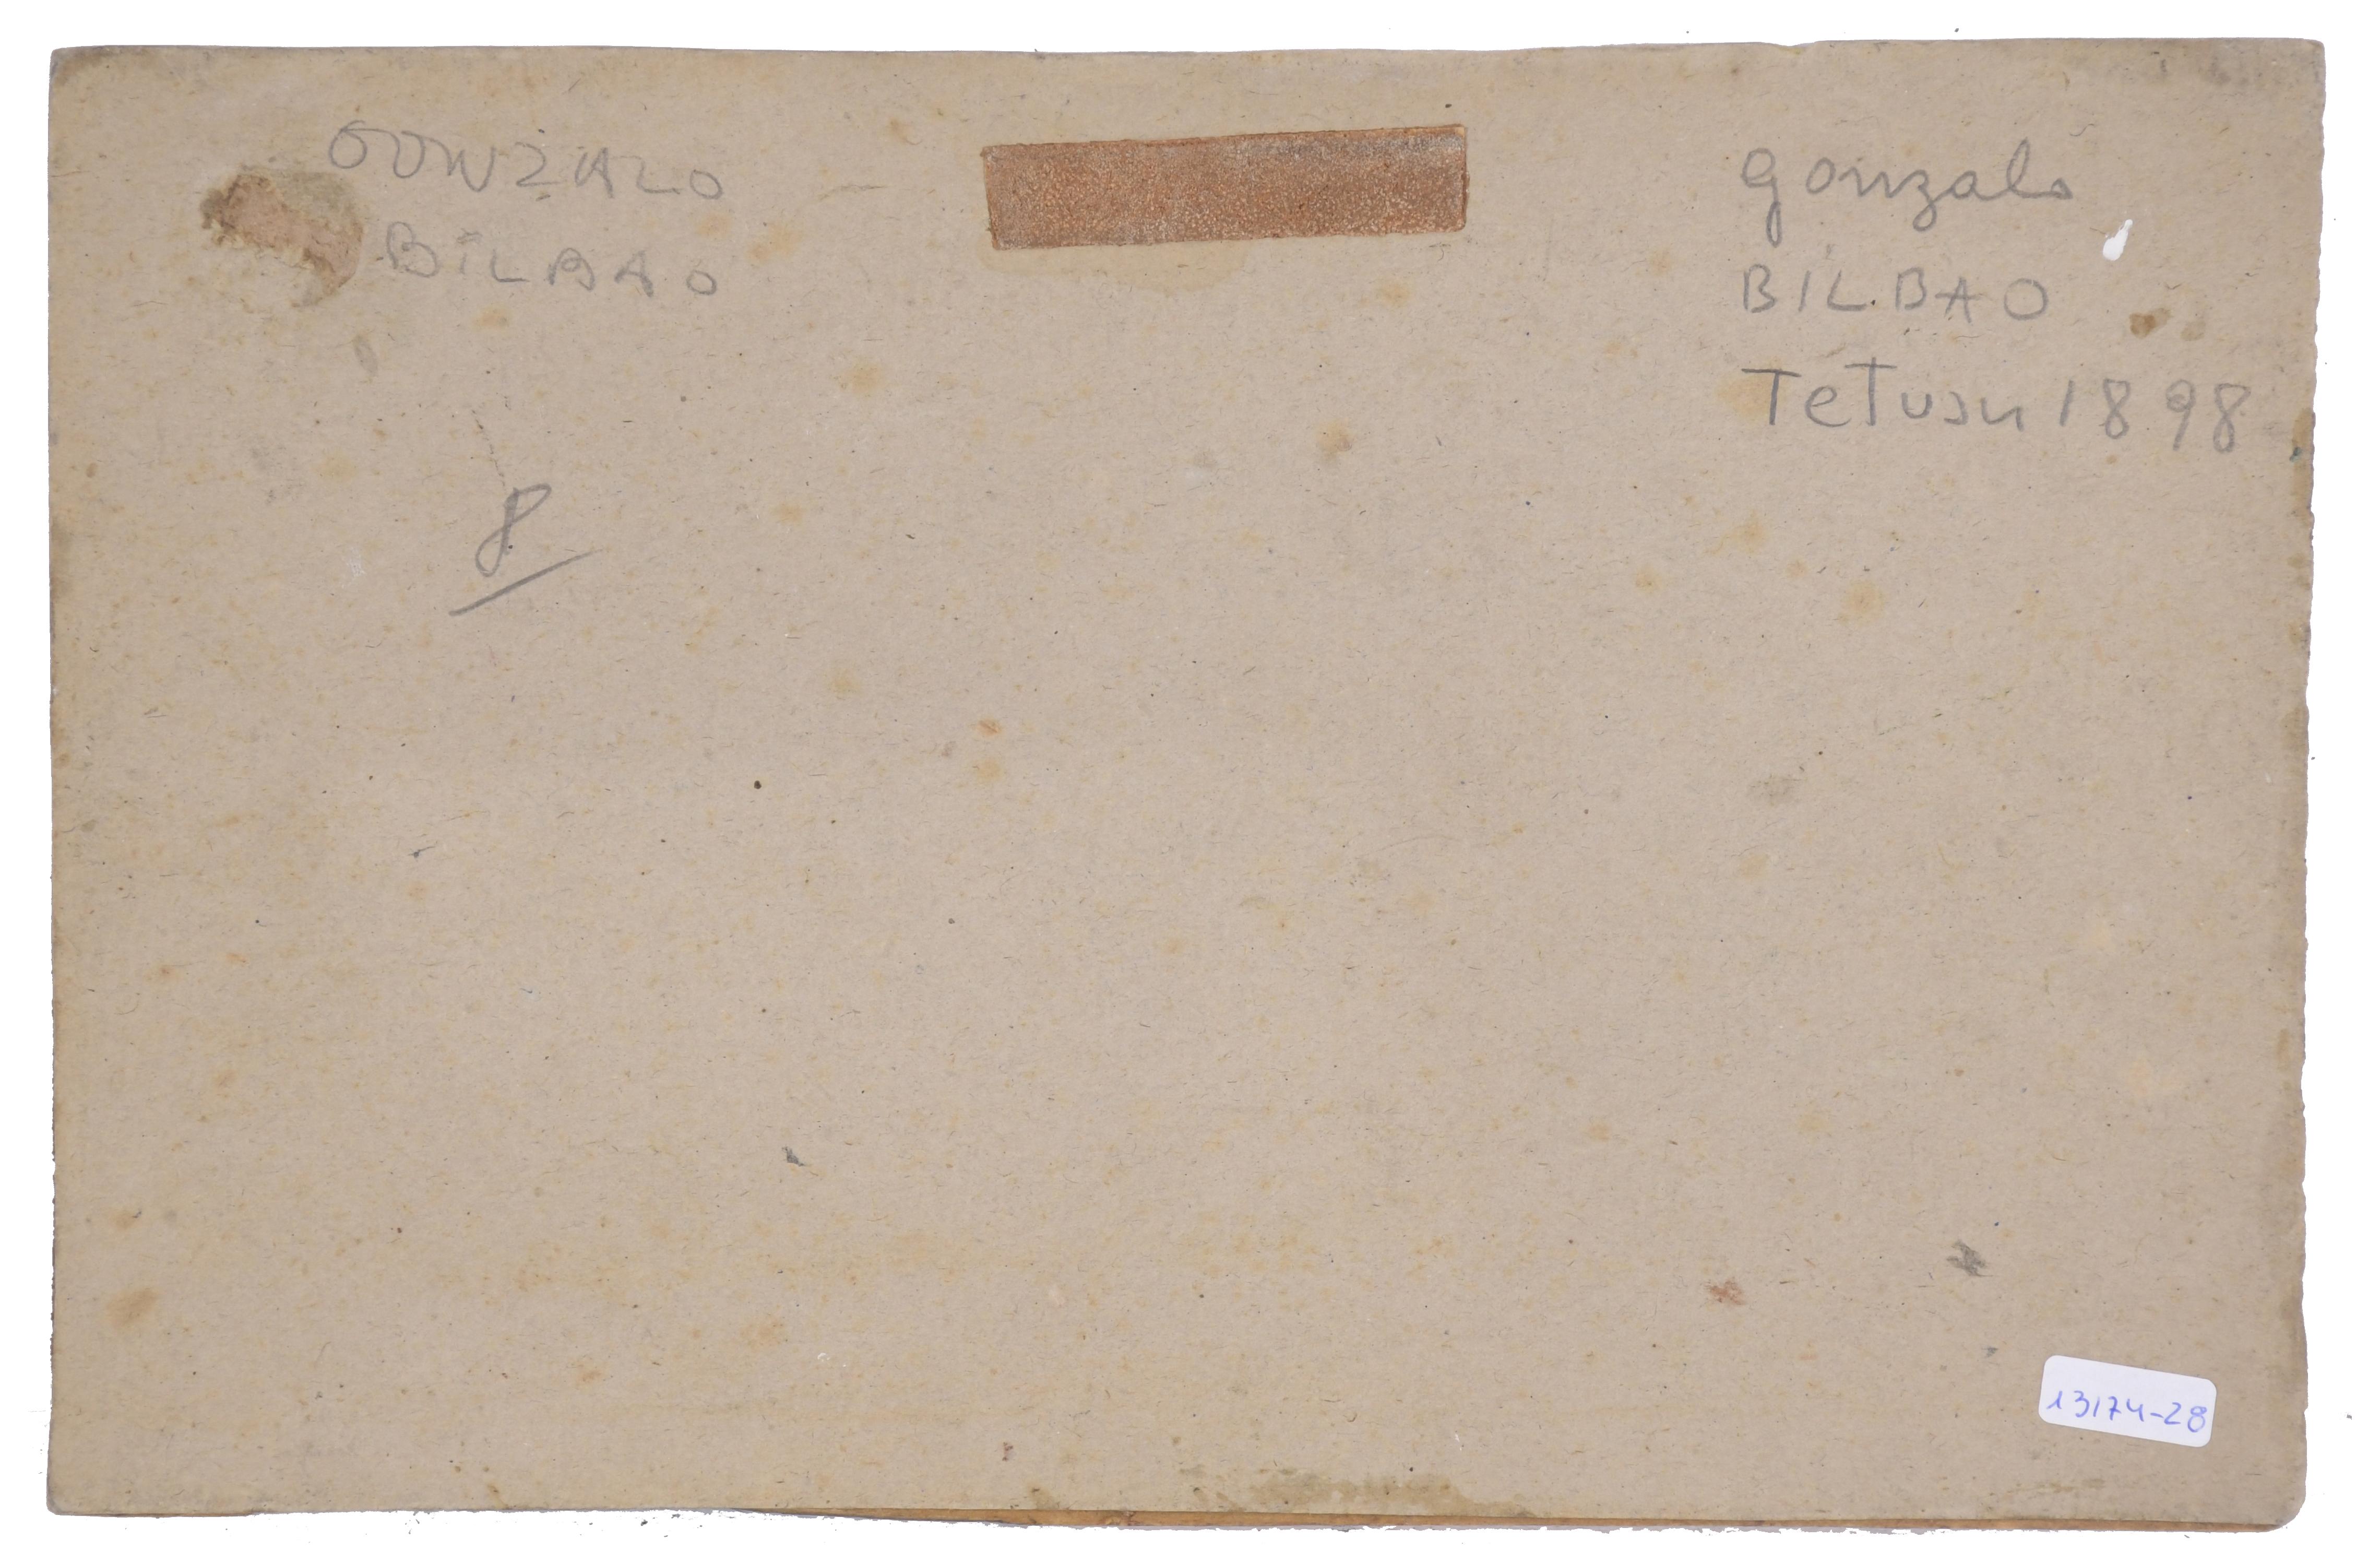 GONZALO BILBAO (1860-1938).  "TETUAN", 1898-99?.